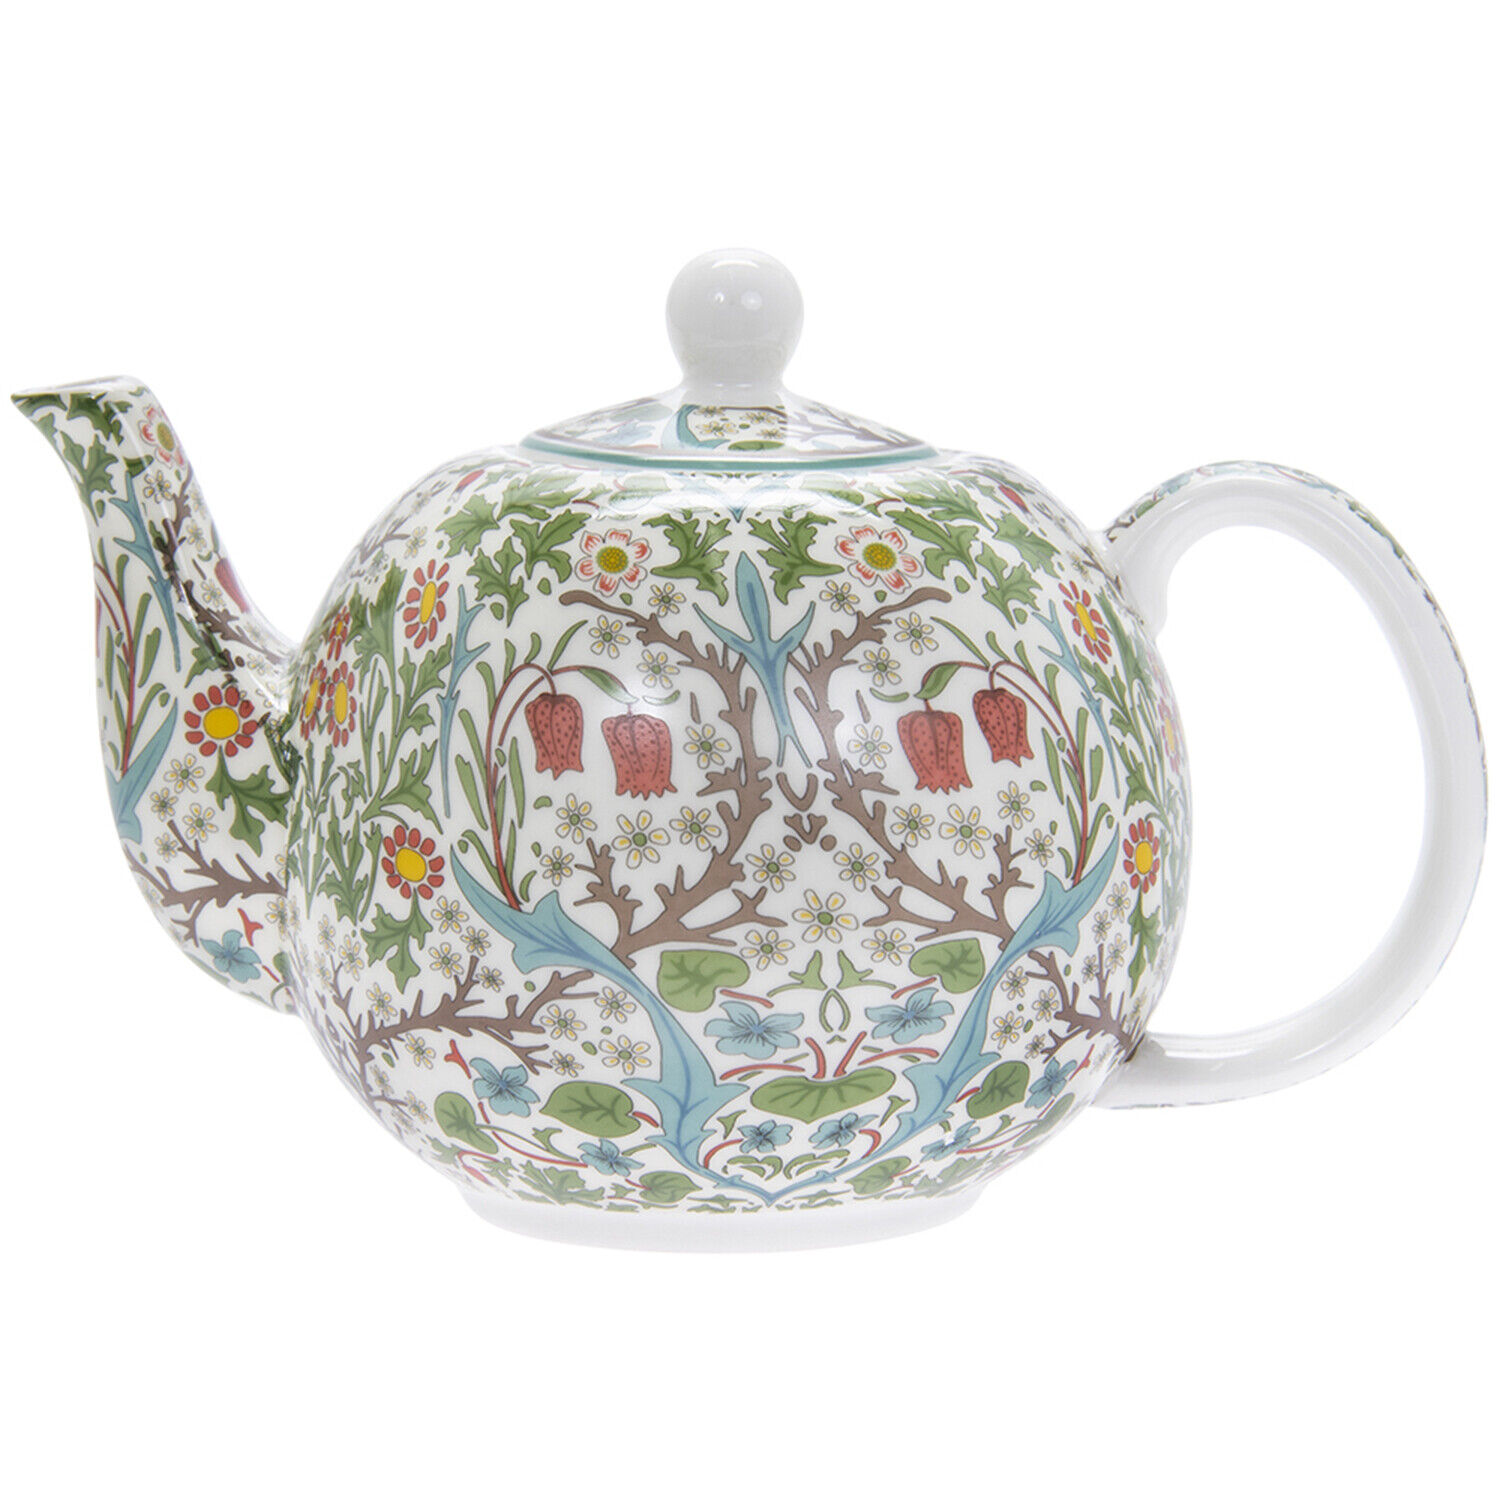 Floral Selling Teapot William Max 62% OFF Morris Blackthorn China Cu Tea Coffee Fine